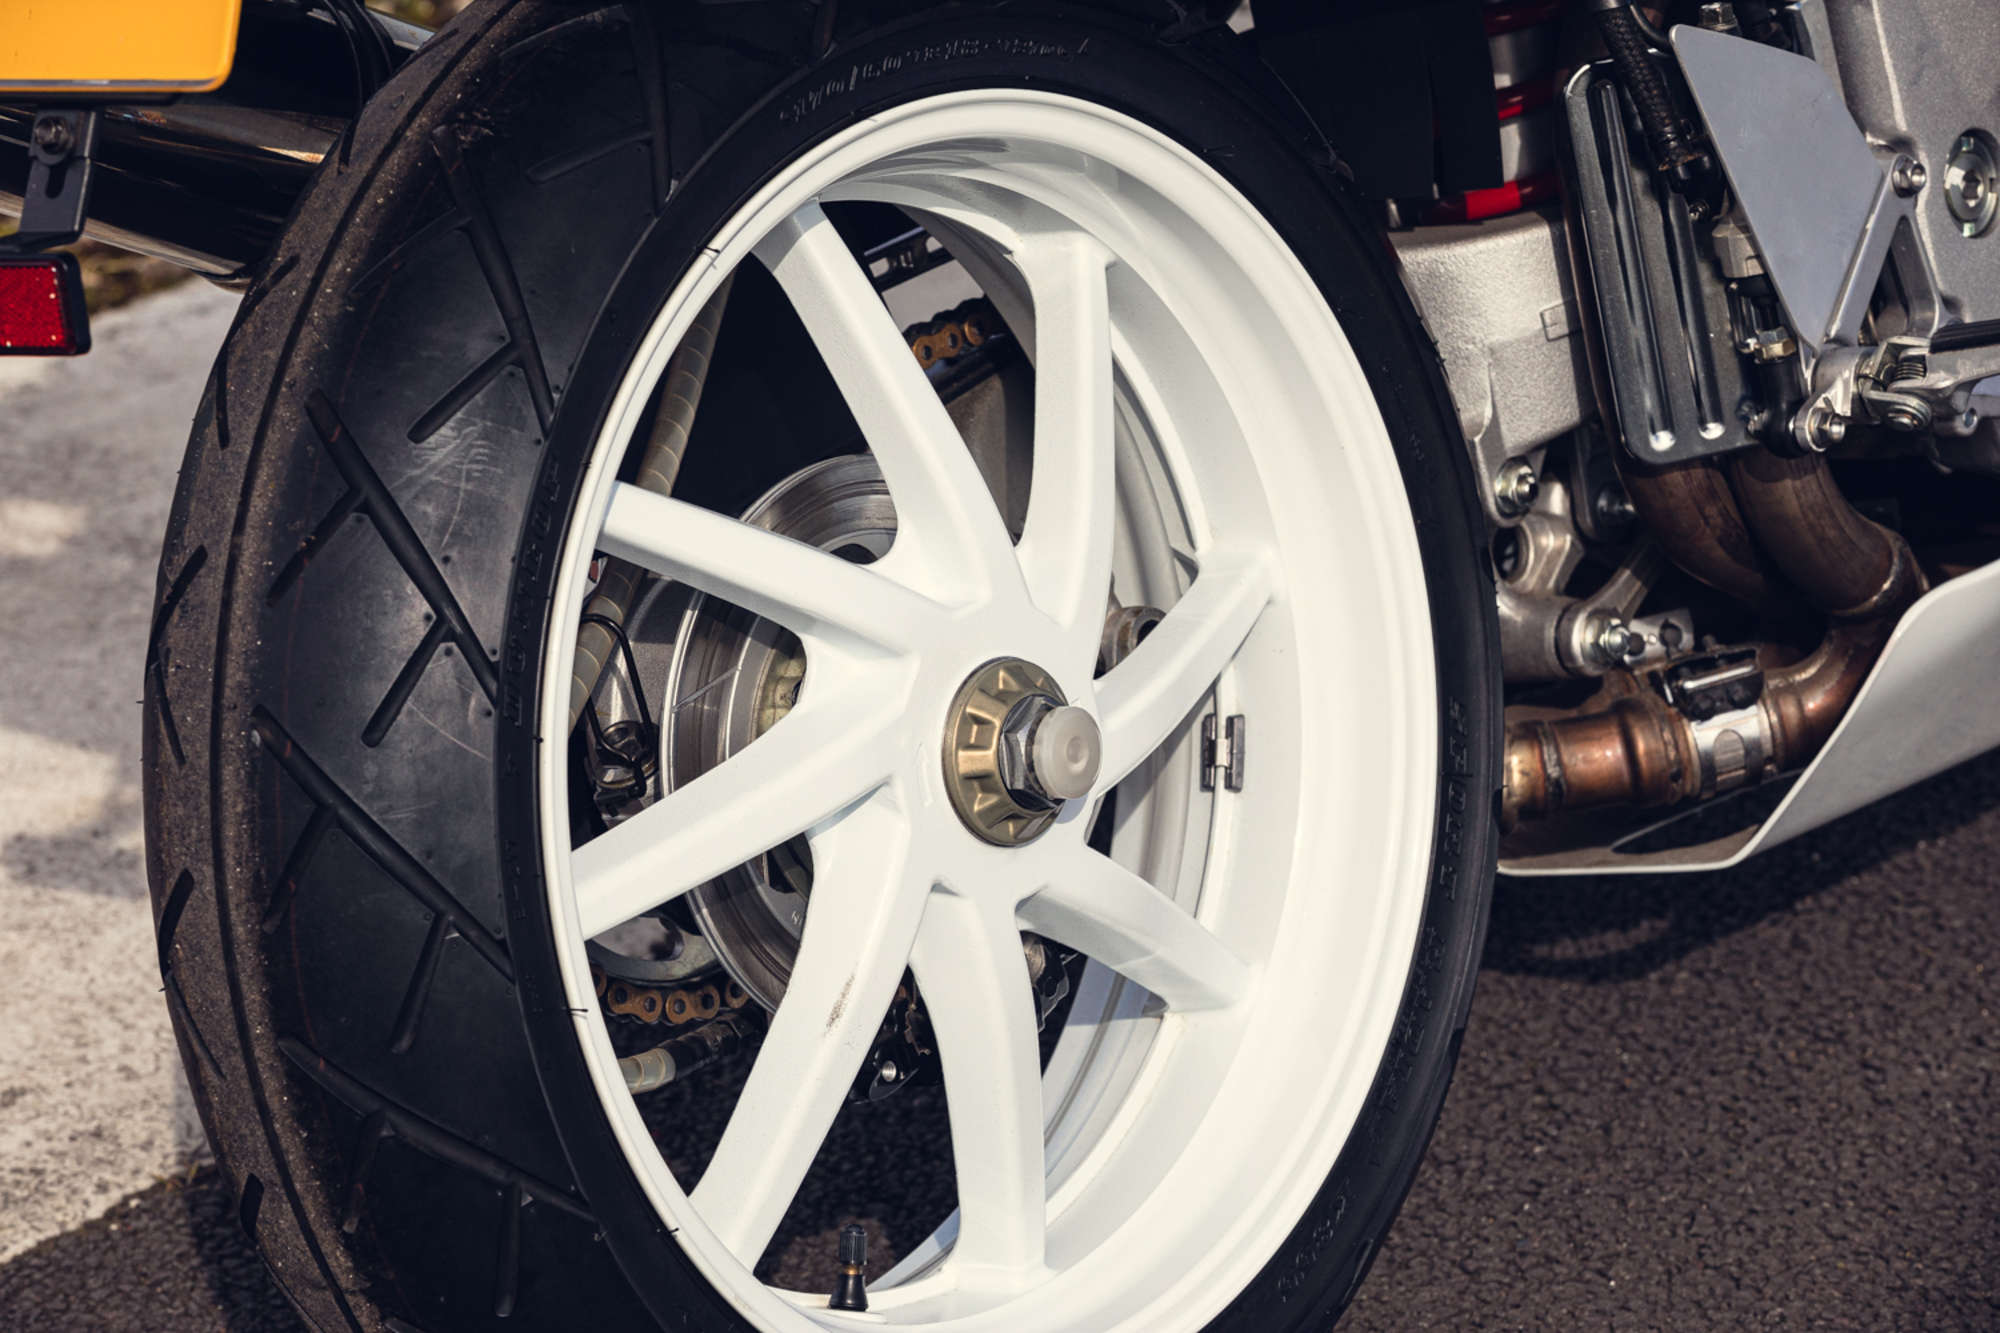 Honda RC30 wheel